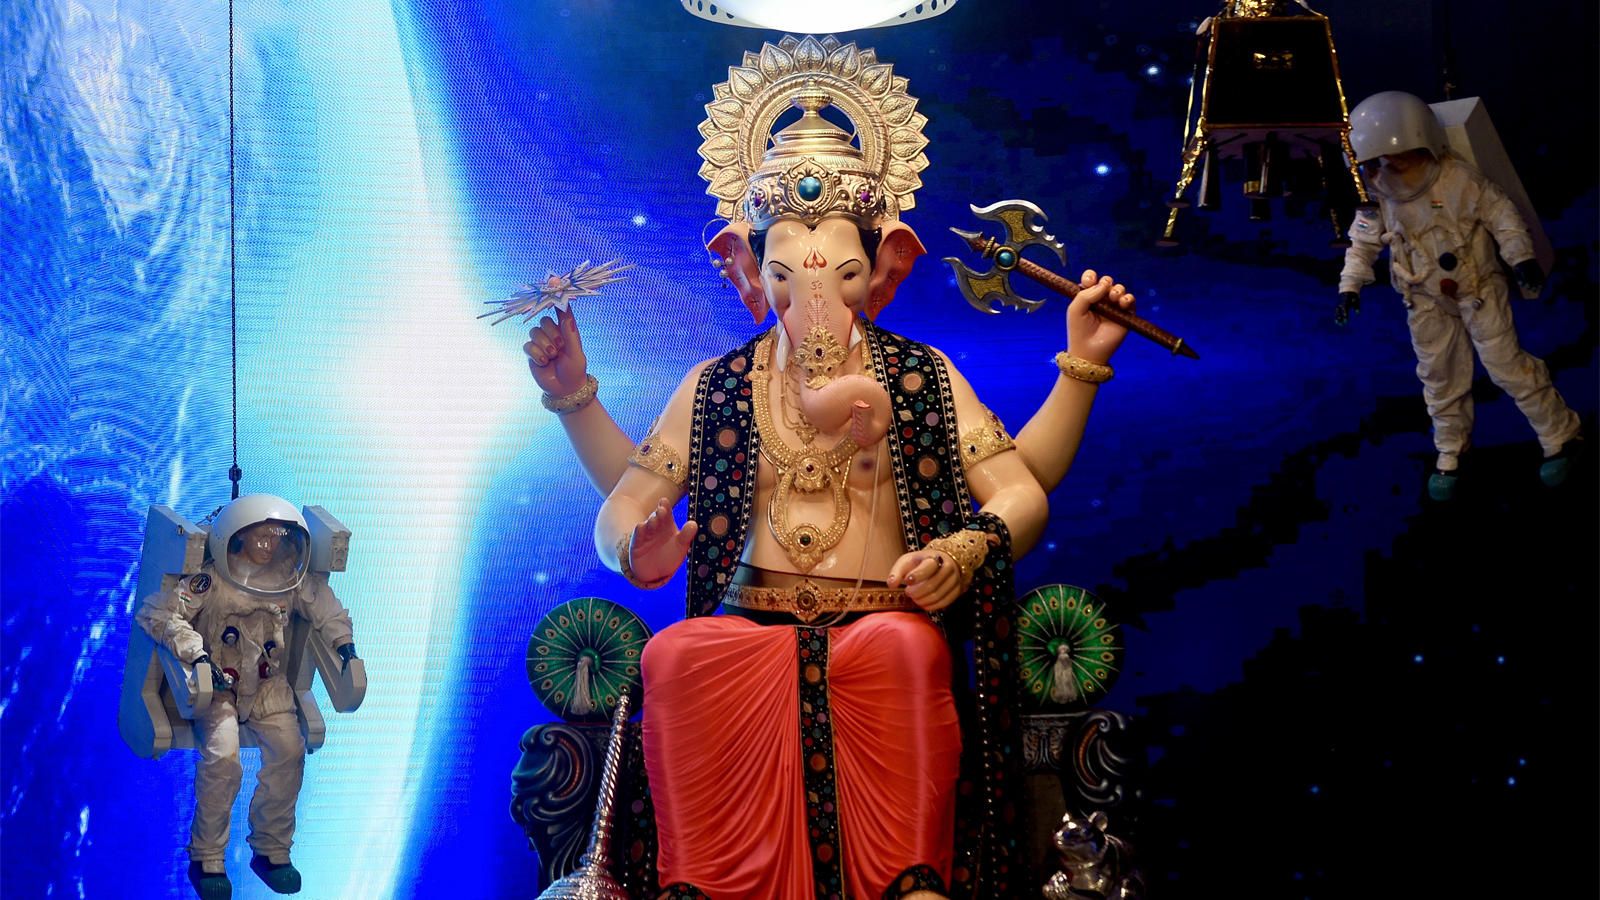 Covid 19: No Lalbaugcha Raja For This Year's Ganesh Chaturthi. City Of India Videos